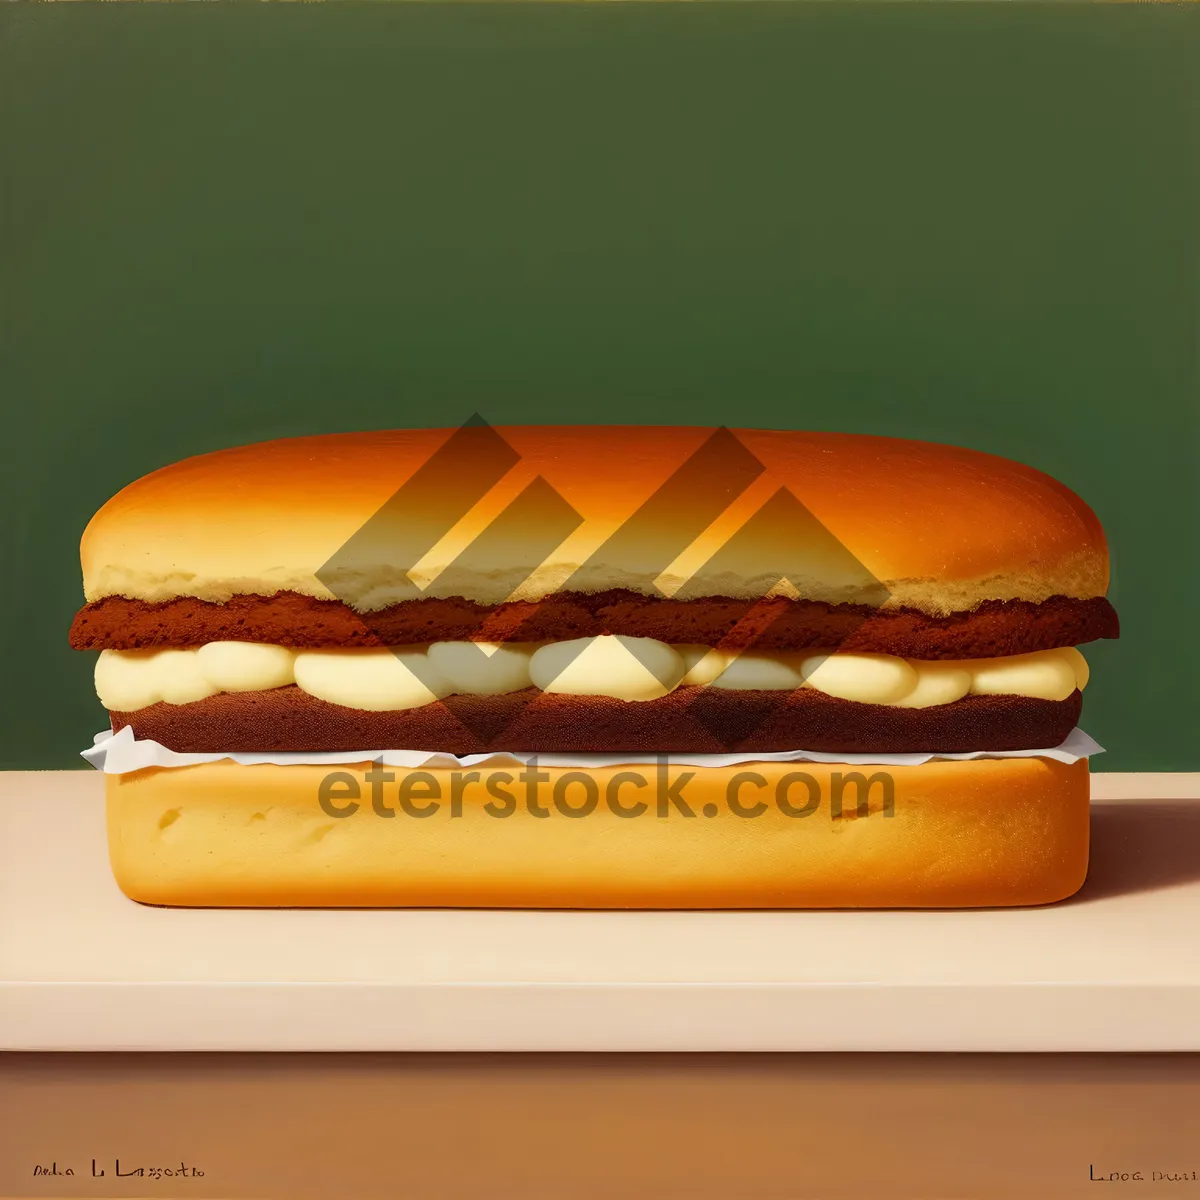 Picture of Delicious Gourmet Cheeseburger on Fresh Bun